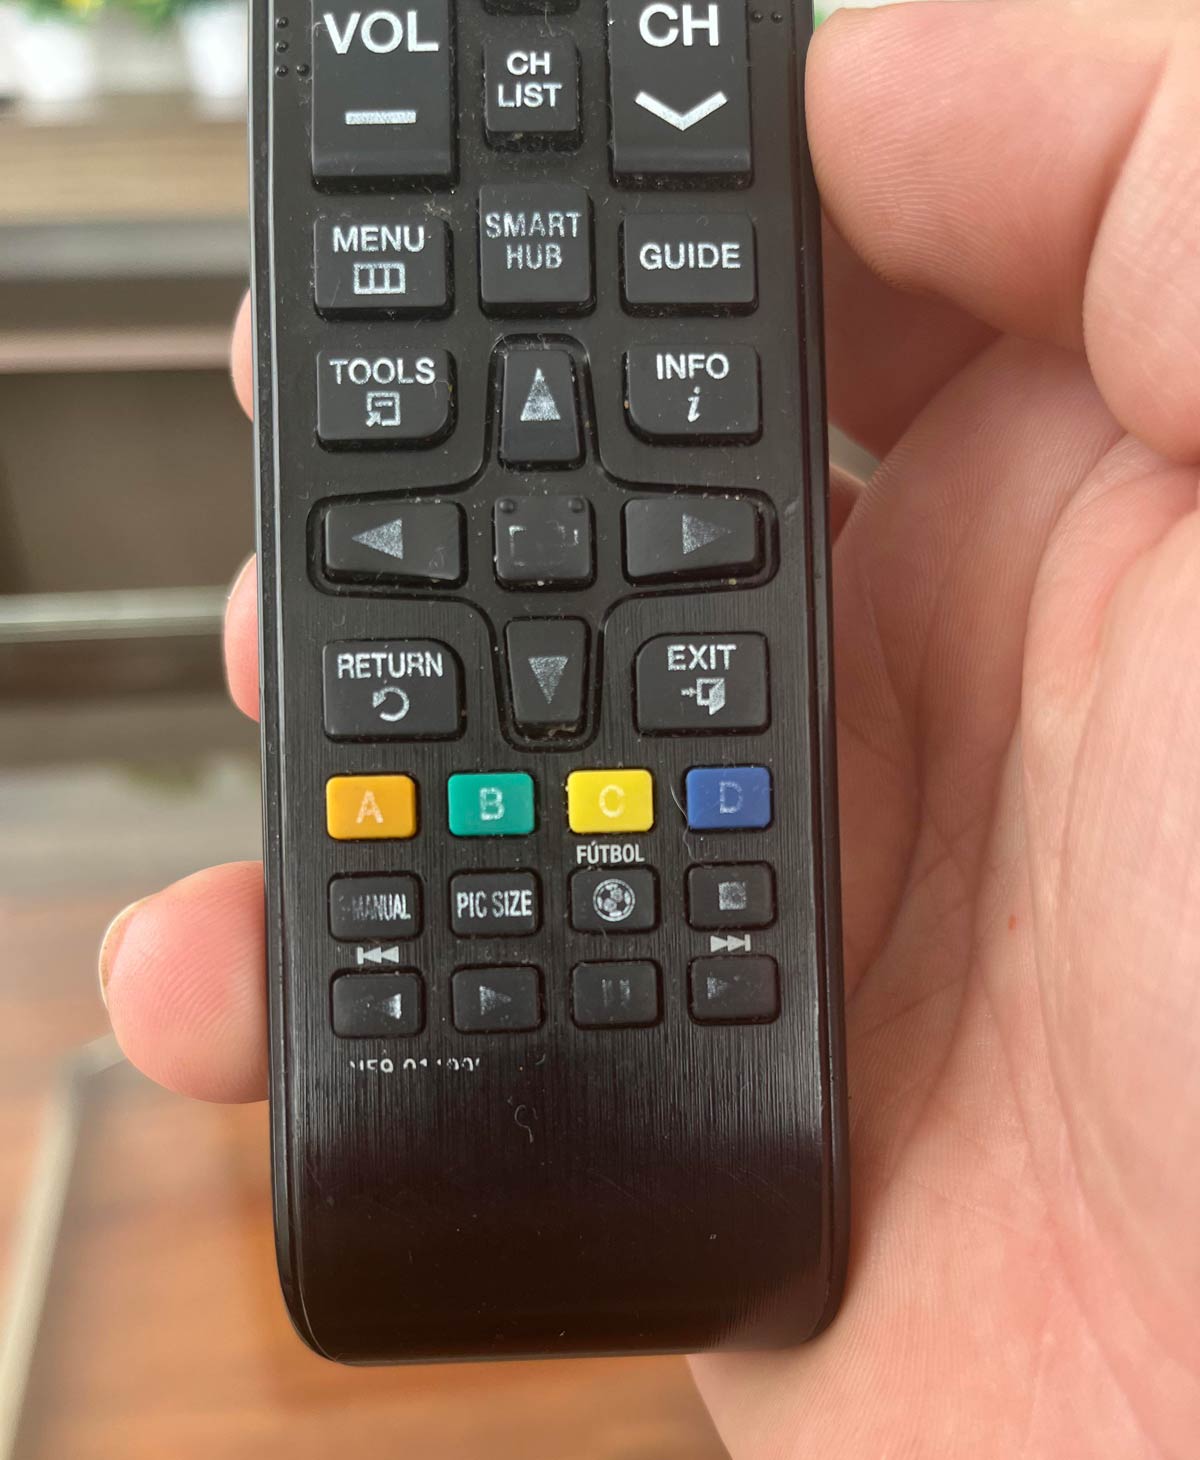 TV remote in Peru has a button for soccer